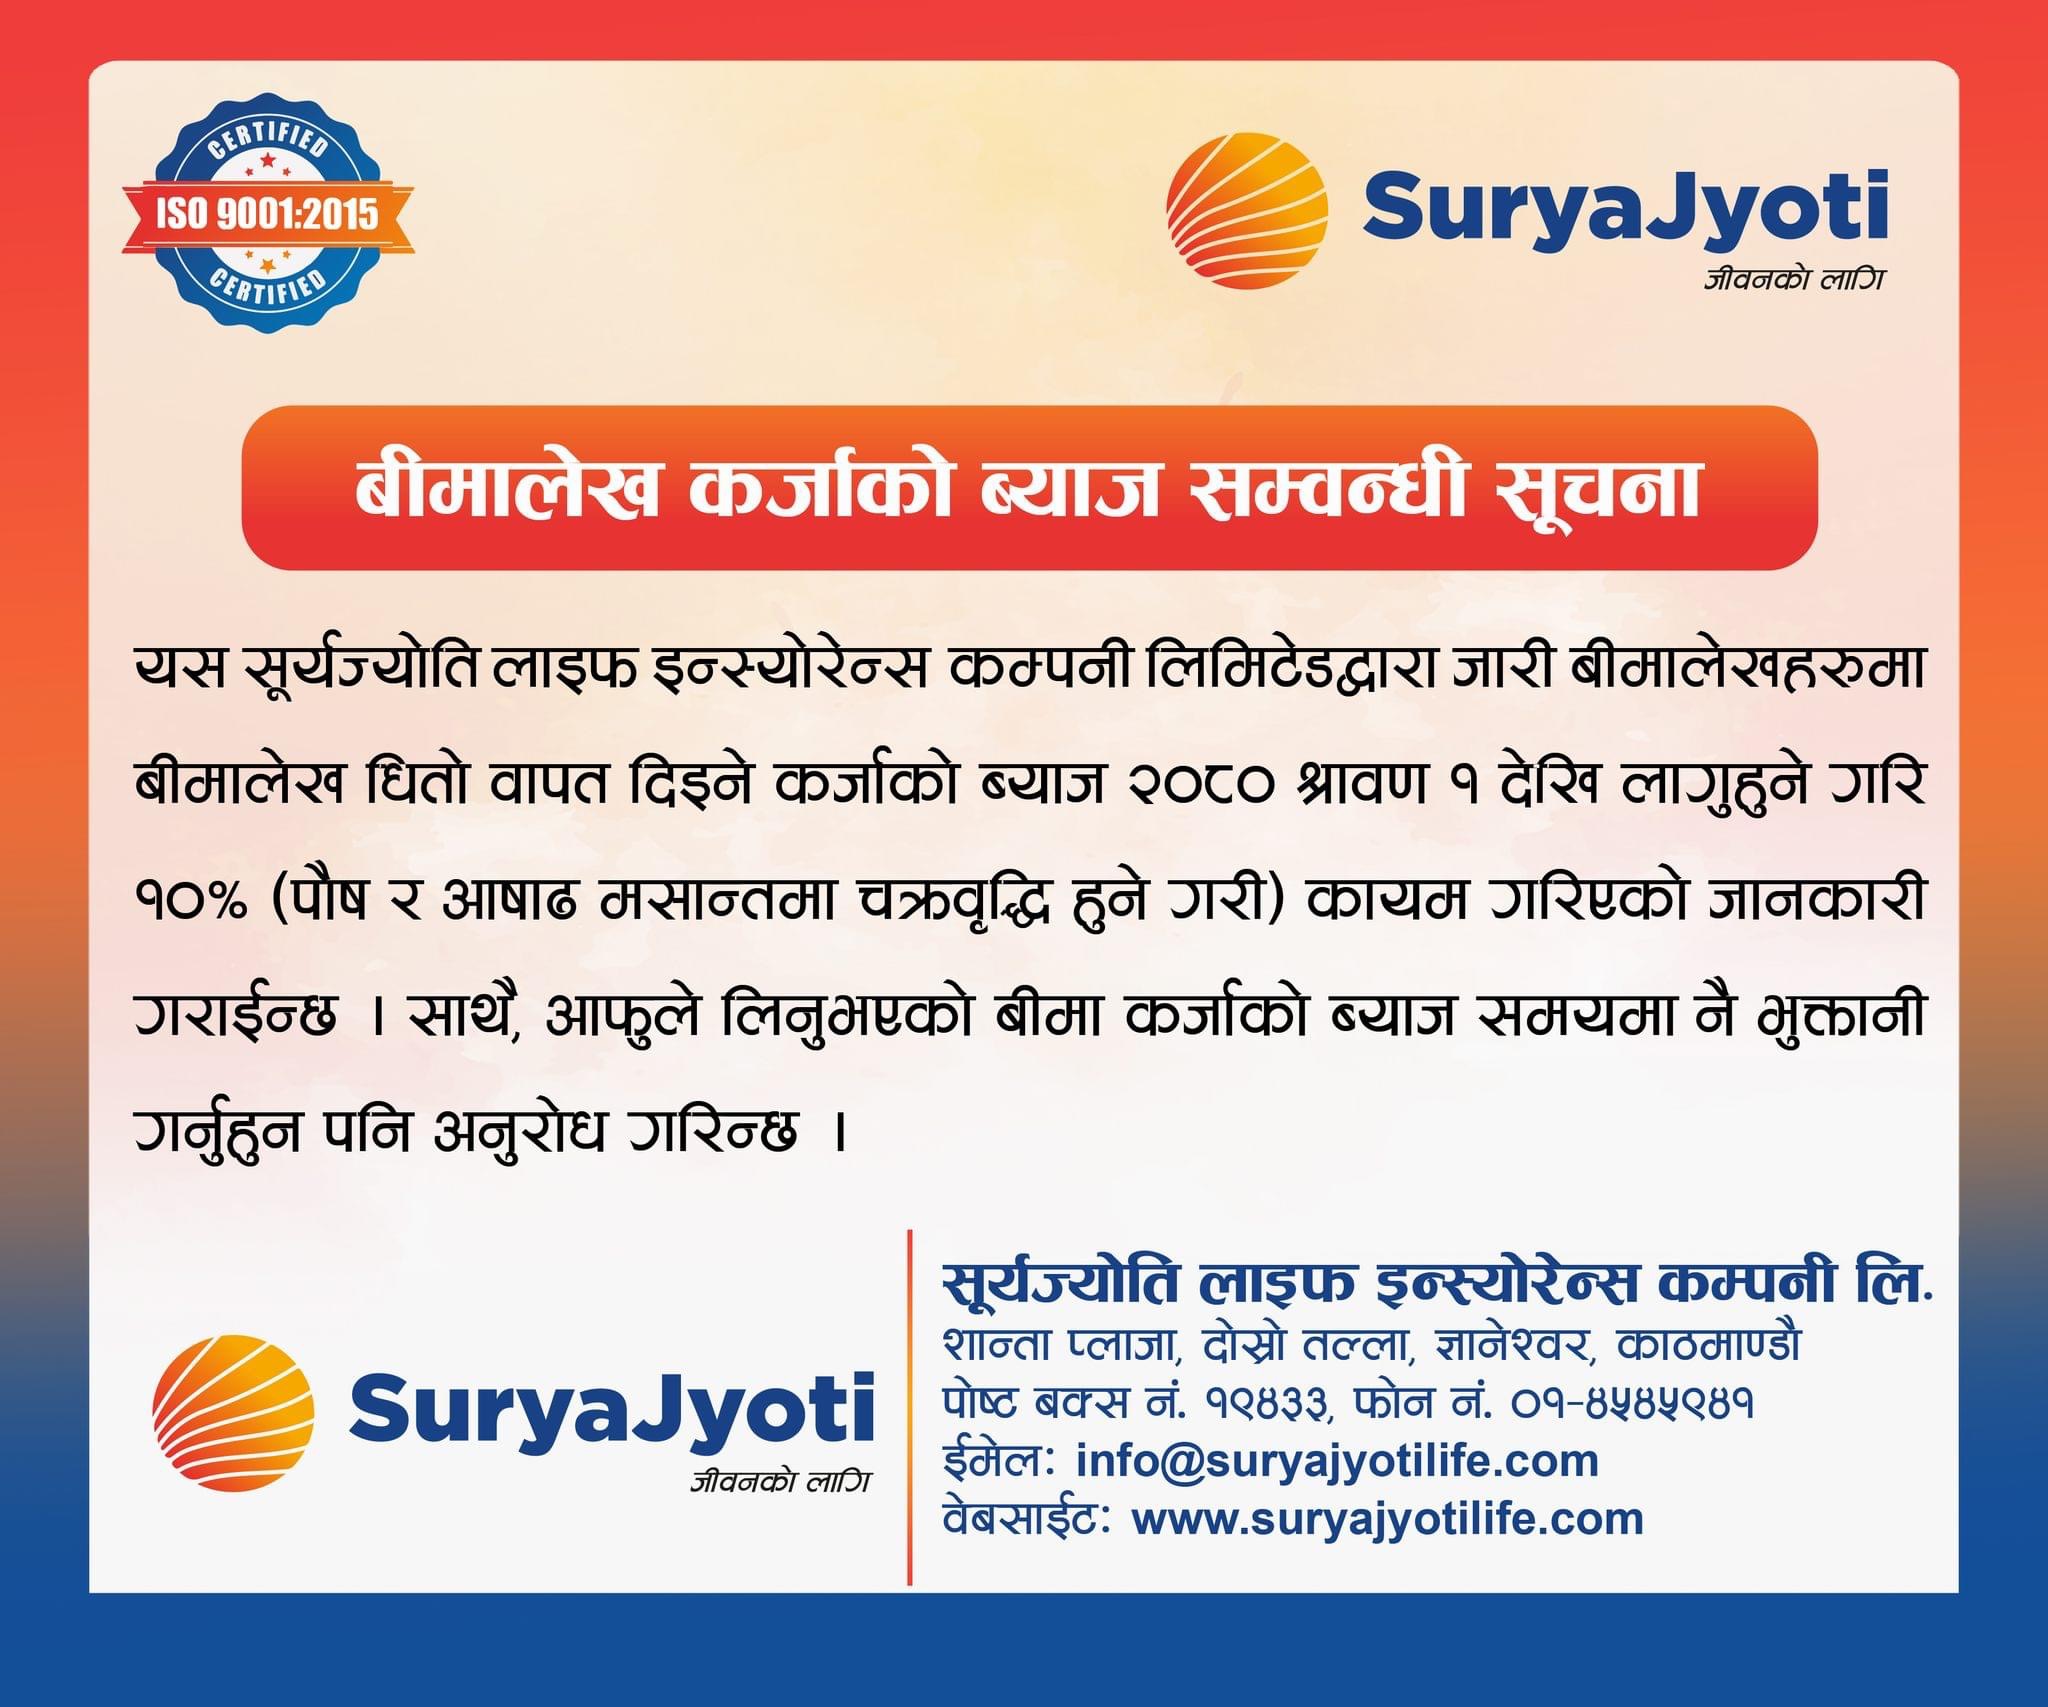 Suryoday Small Finance Bank - Crunchbase Company Profile & Funding